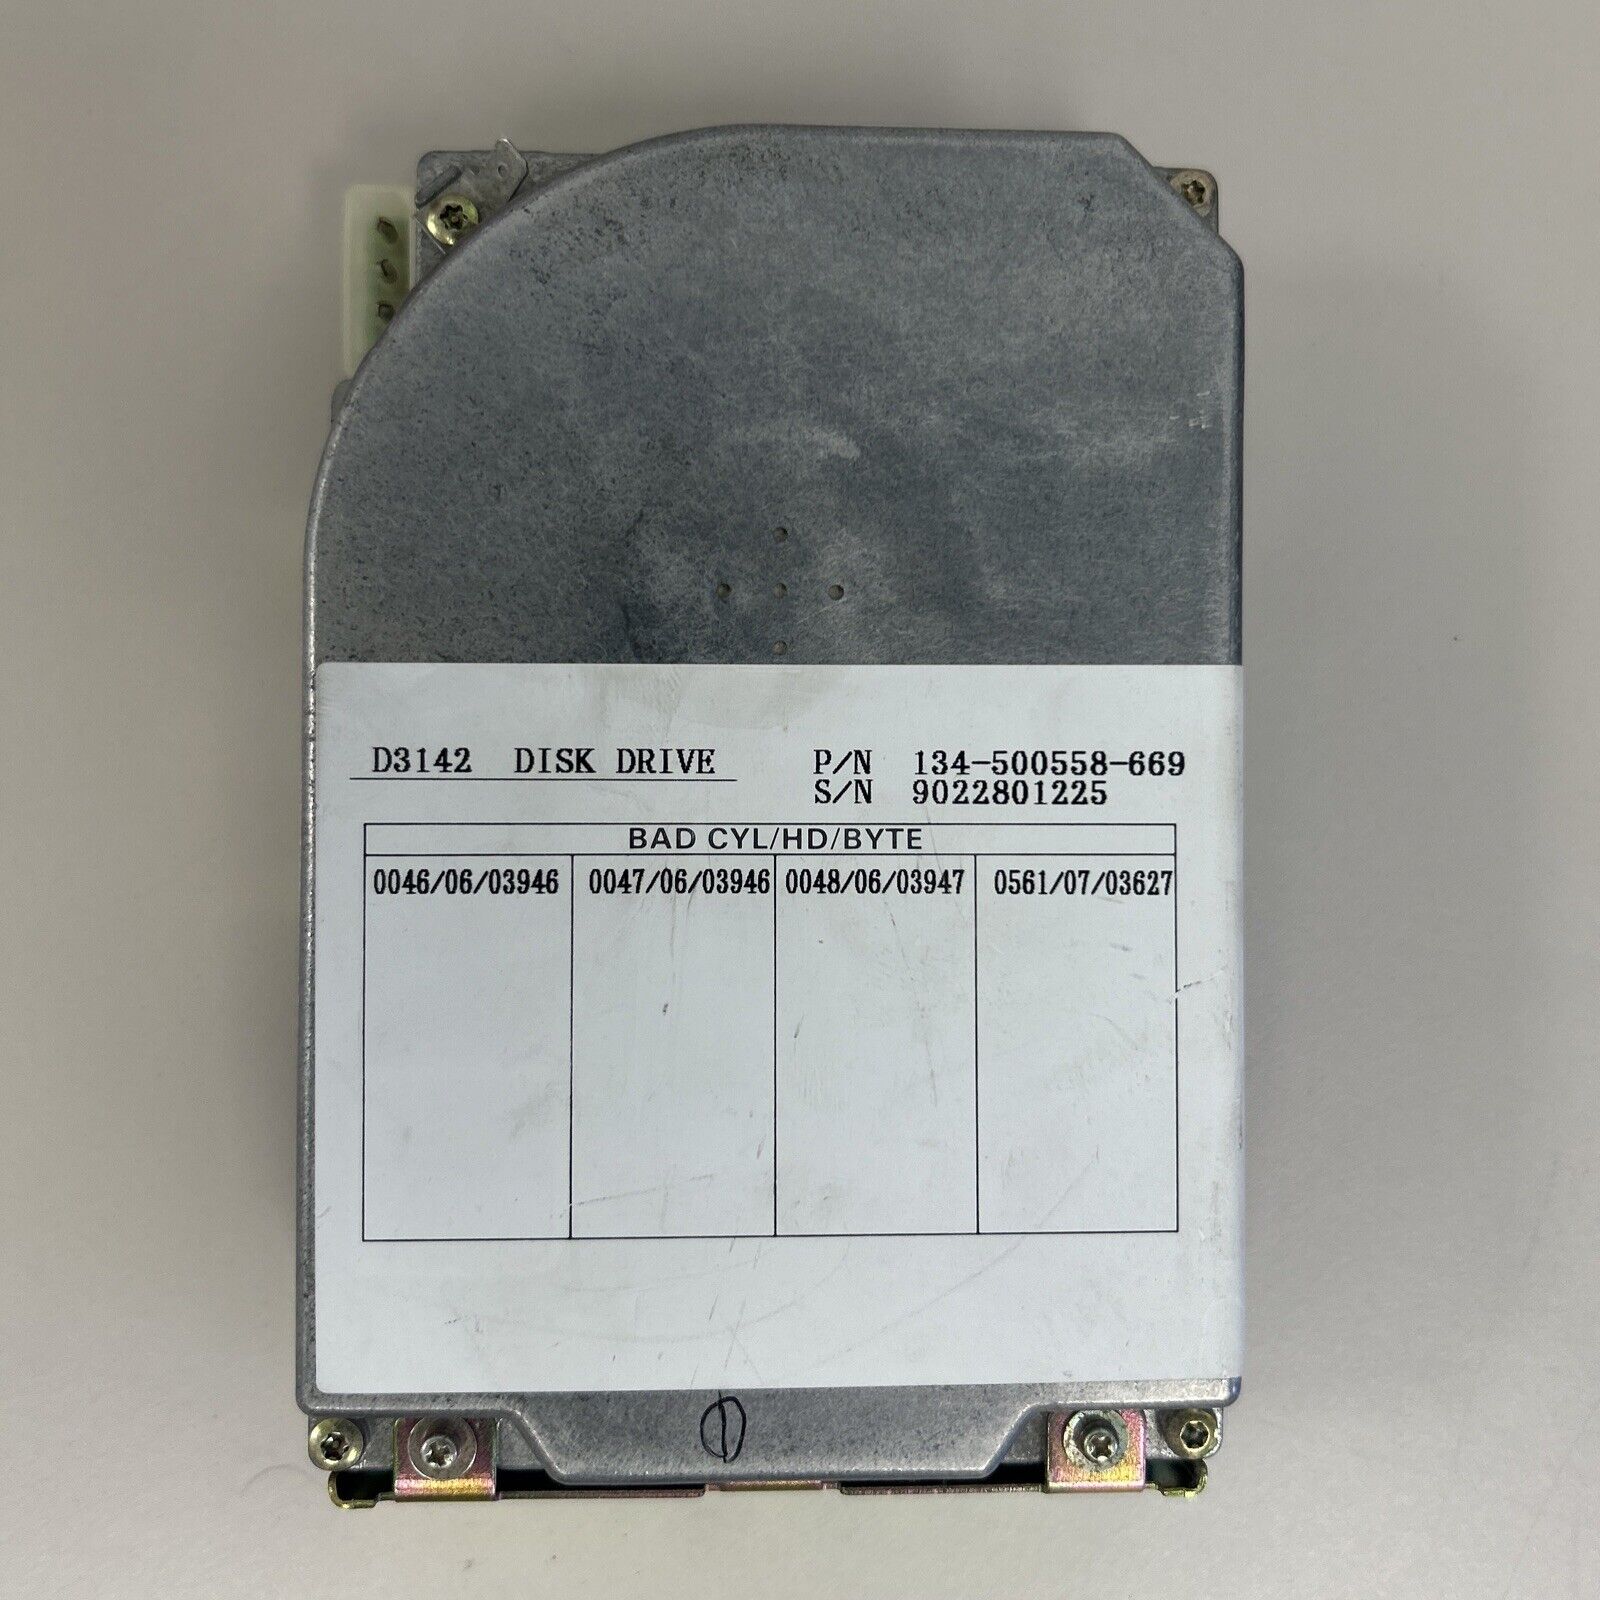 NEC D3741, 134-500500558-669 SCSI Hard Drive